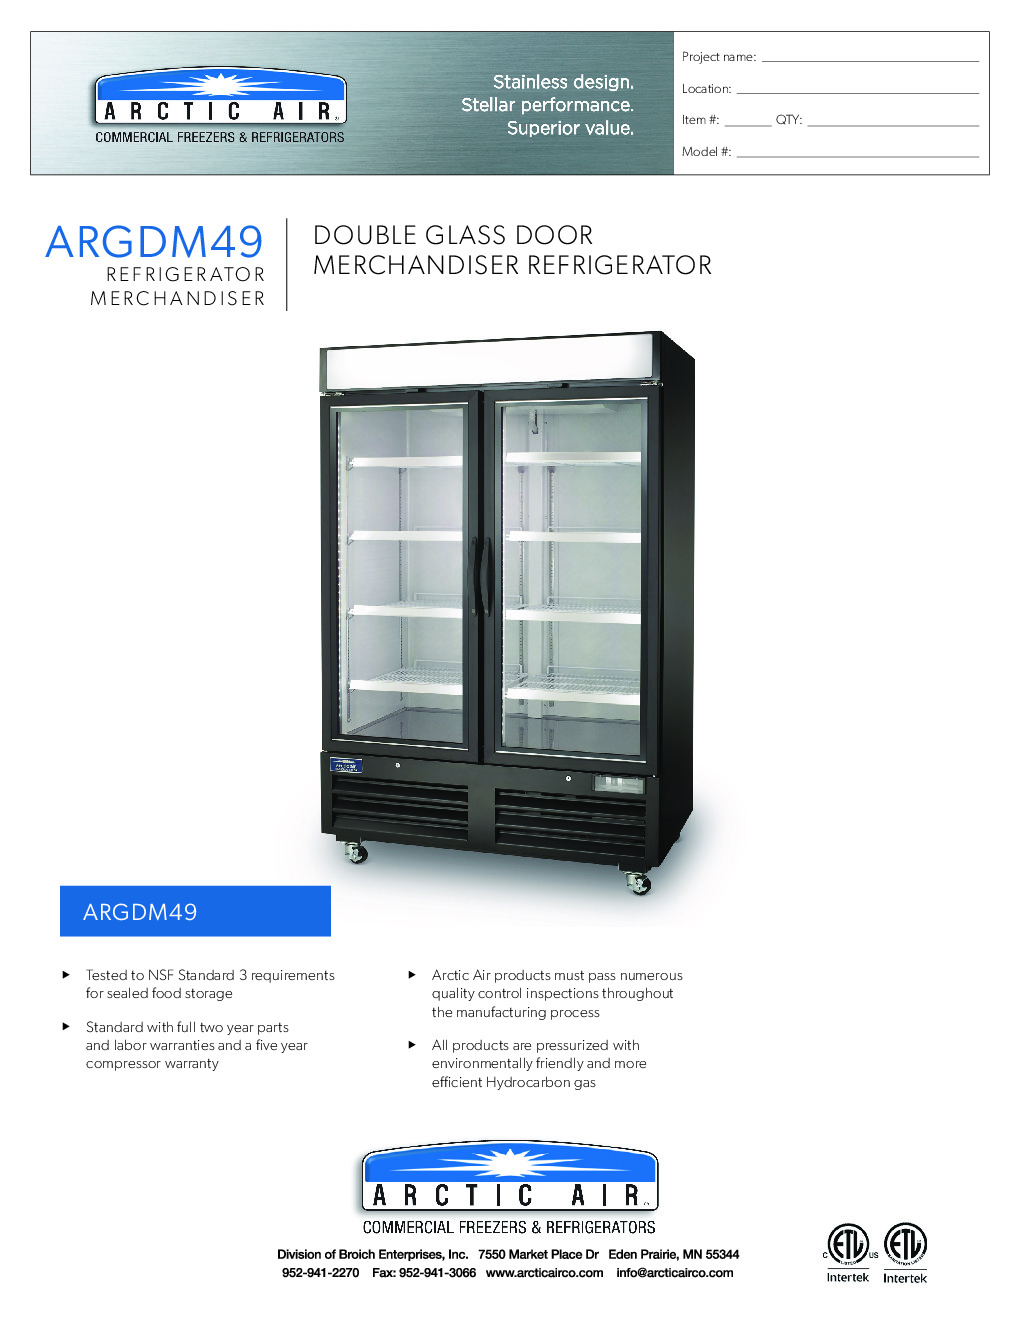 Arctic Air ARGDM49 Merchandiser Refrigerator